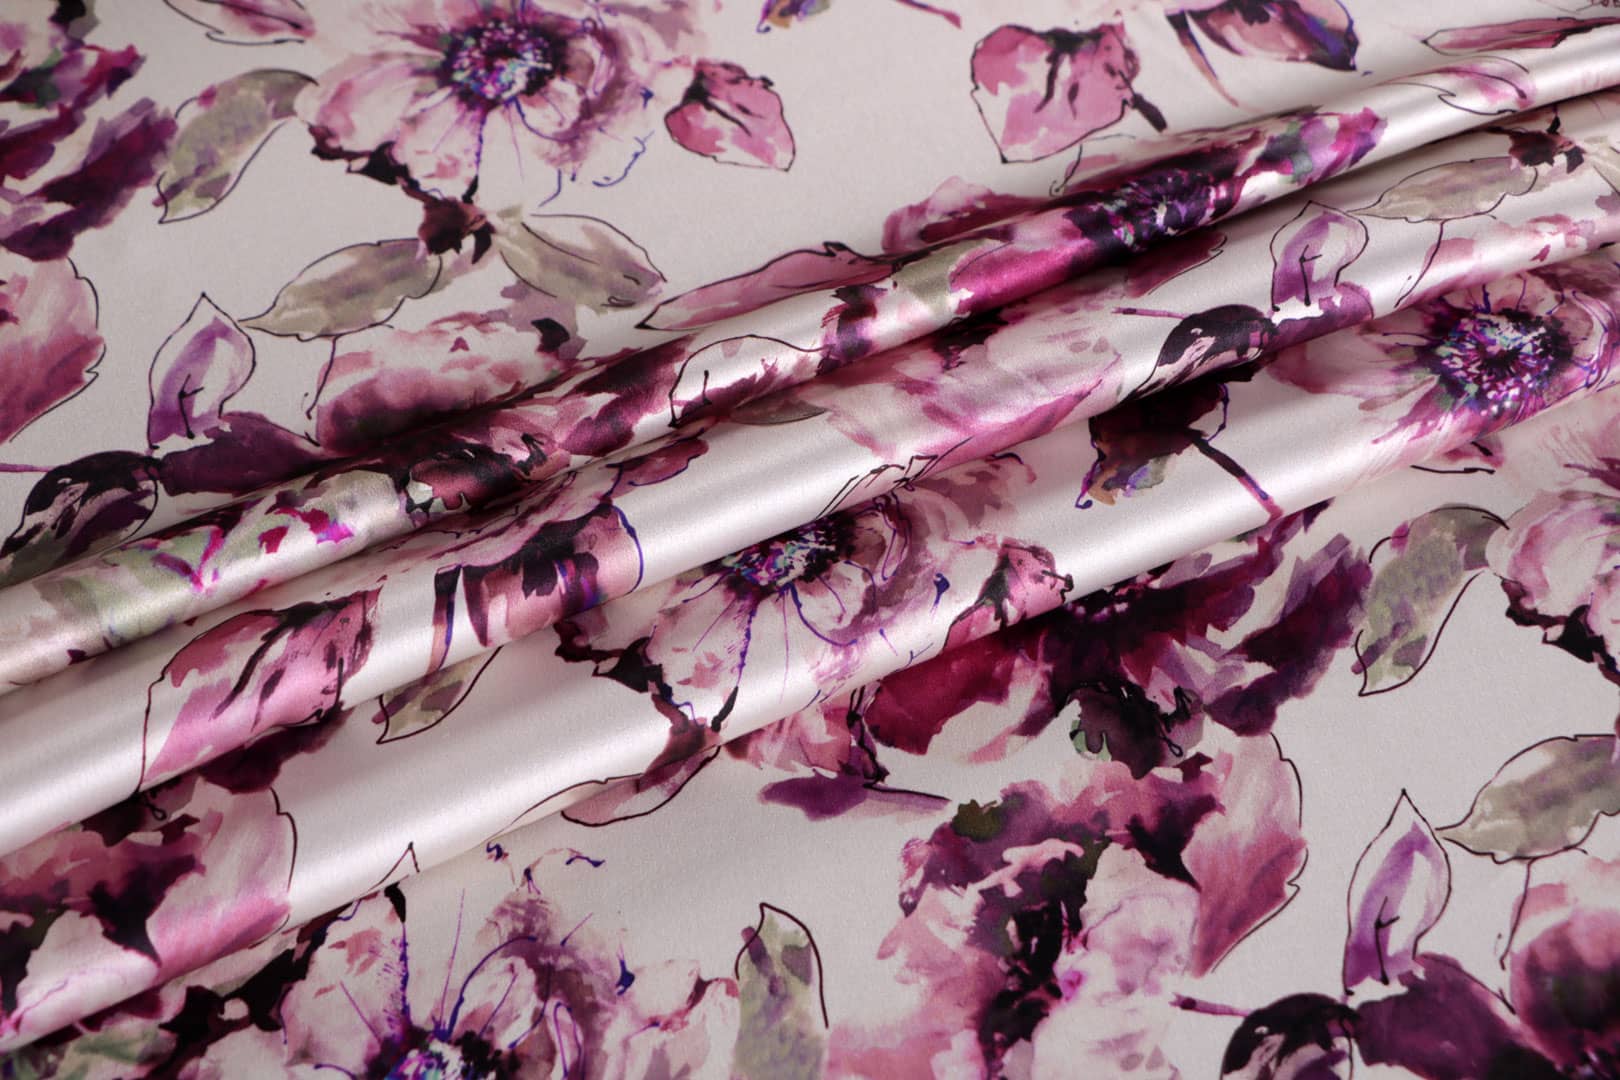 Fuxia, Pink Silk Crêpe Satin fabric for dressmaking